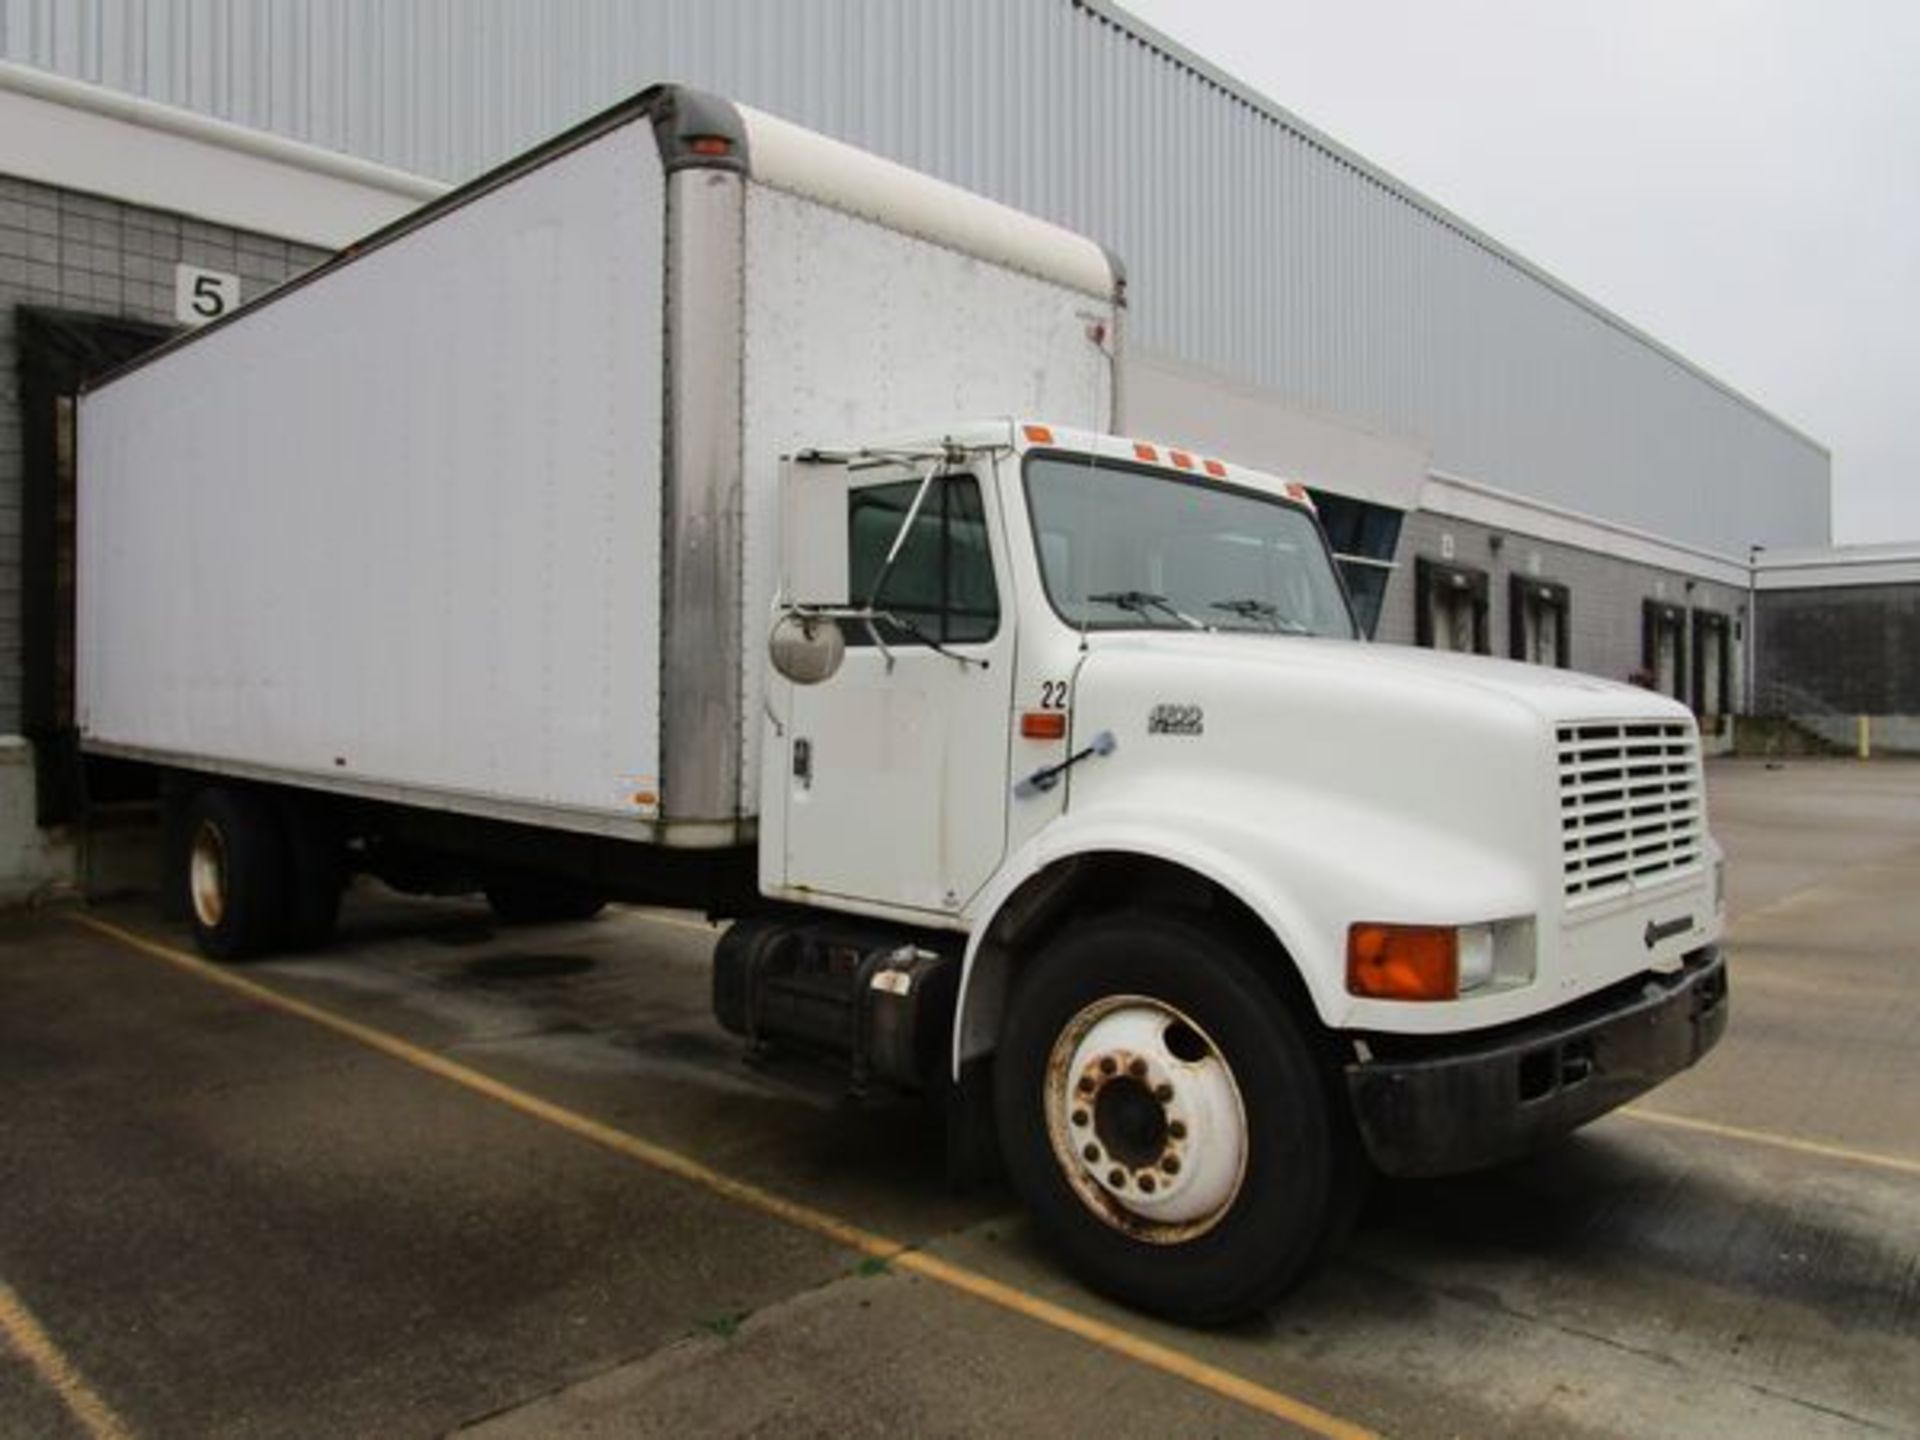 1999 International 4700 DT466 Box Truck VIN 1HTSCAAM8XH667095, 24' Supreme Box, 265,331 Miles